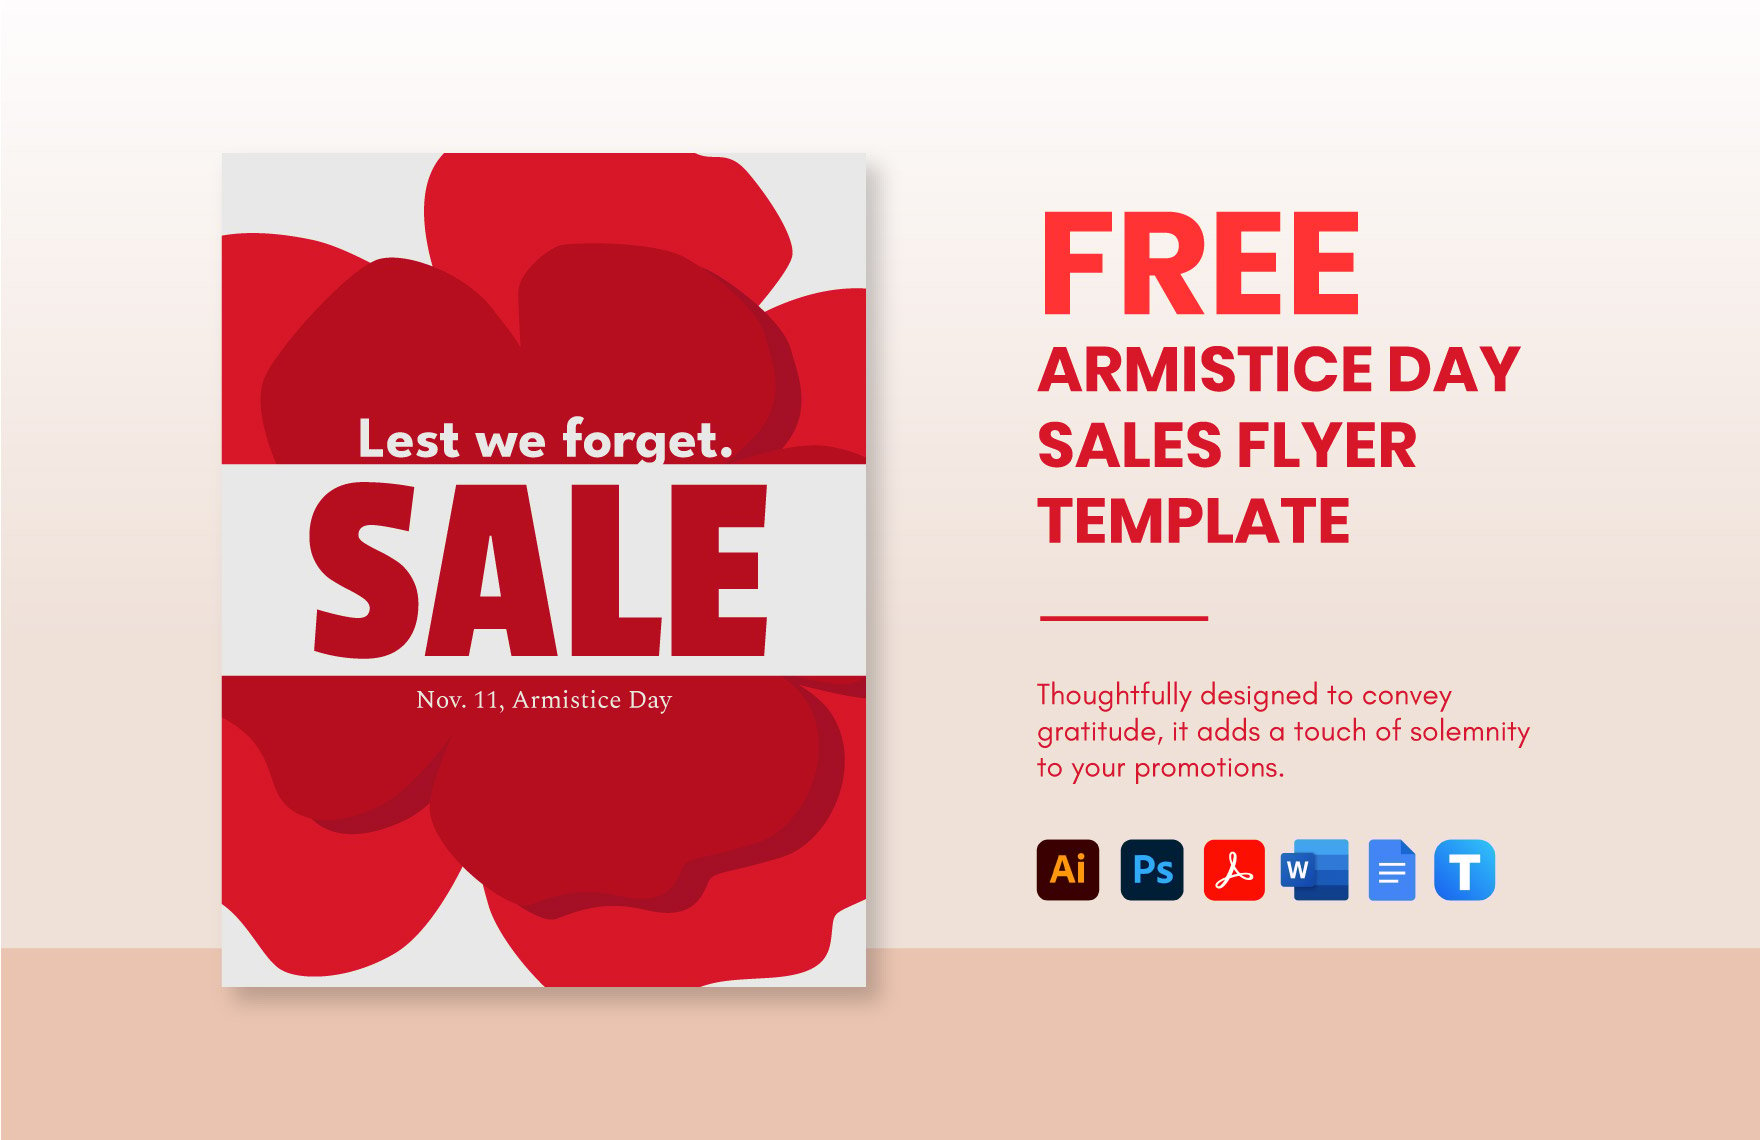 Free Armistice Day Sales Flyer Template in Word, Google Docs, PDF, Illustrator, PSD